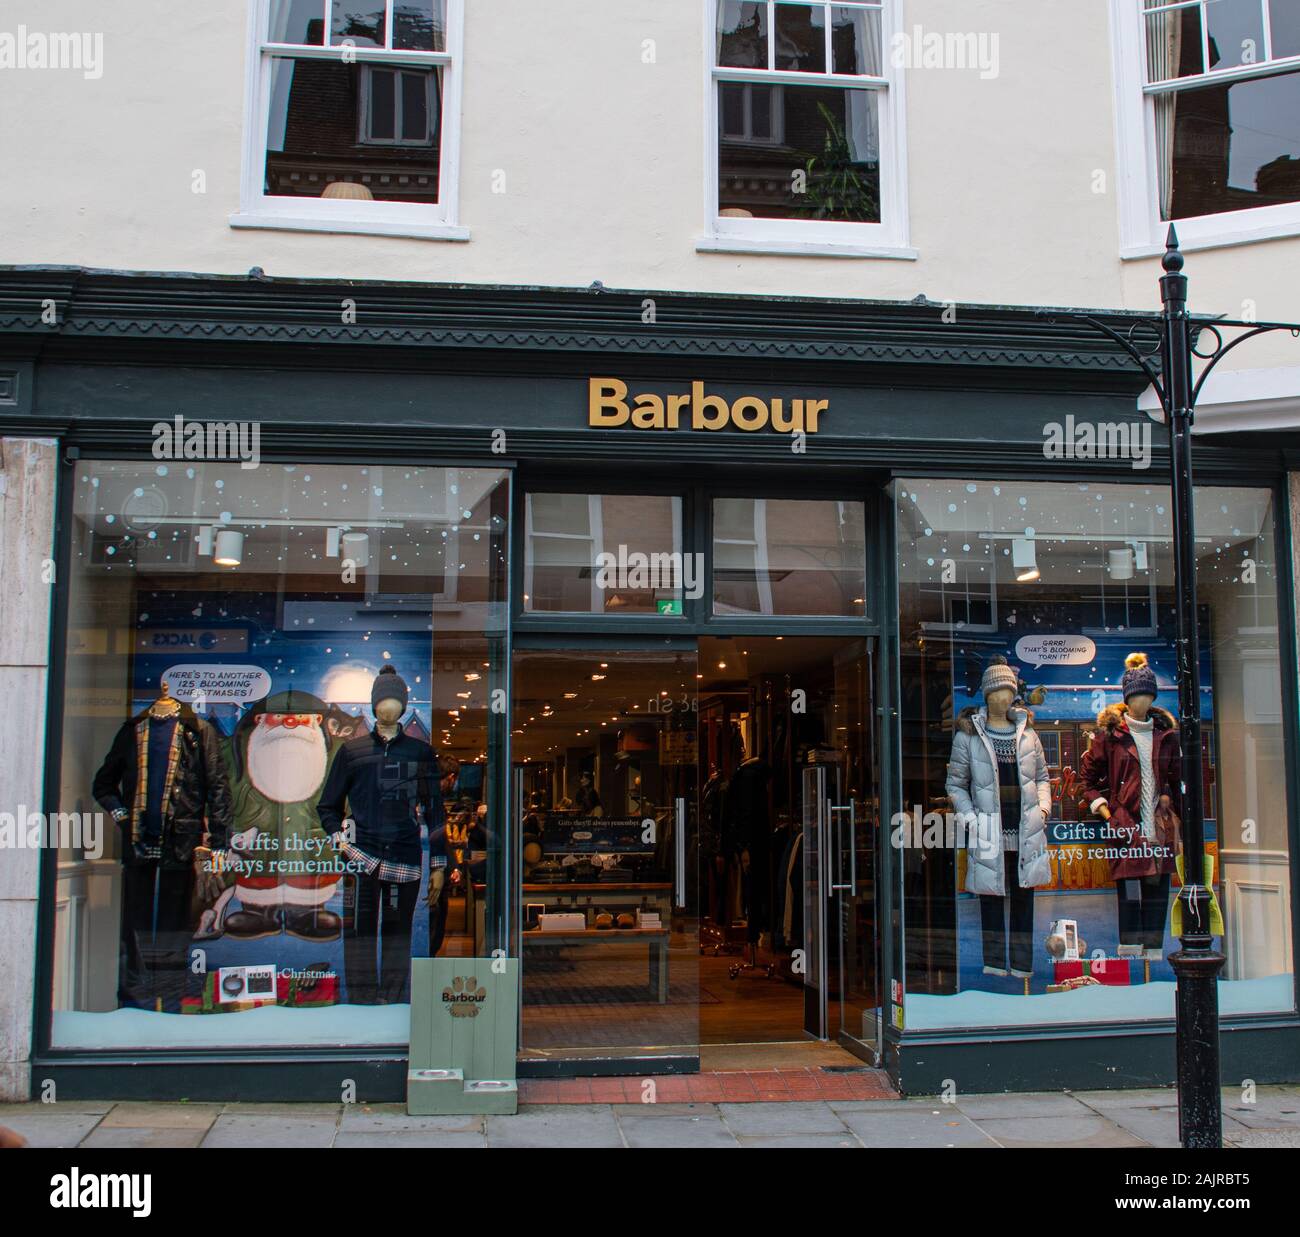 barbour clothing shop